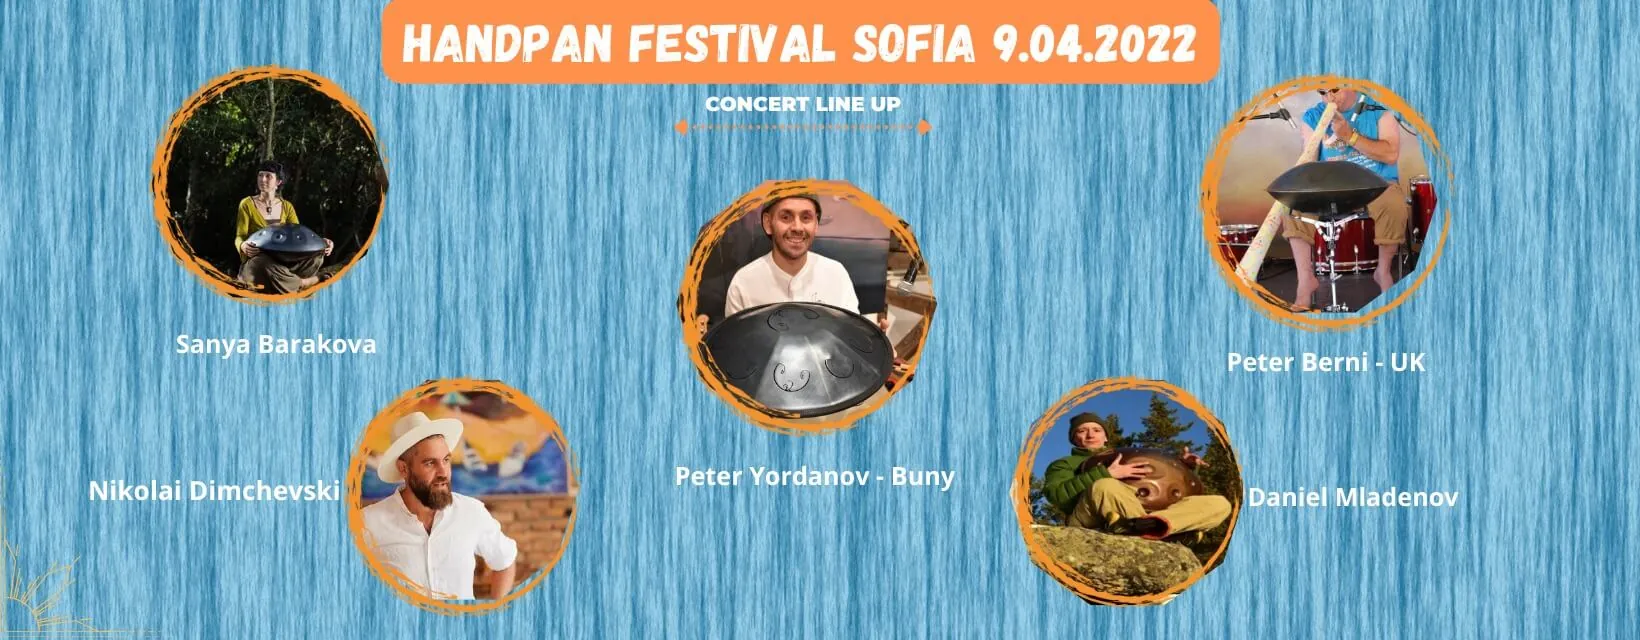 Handpan Festival Sofia 2022